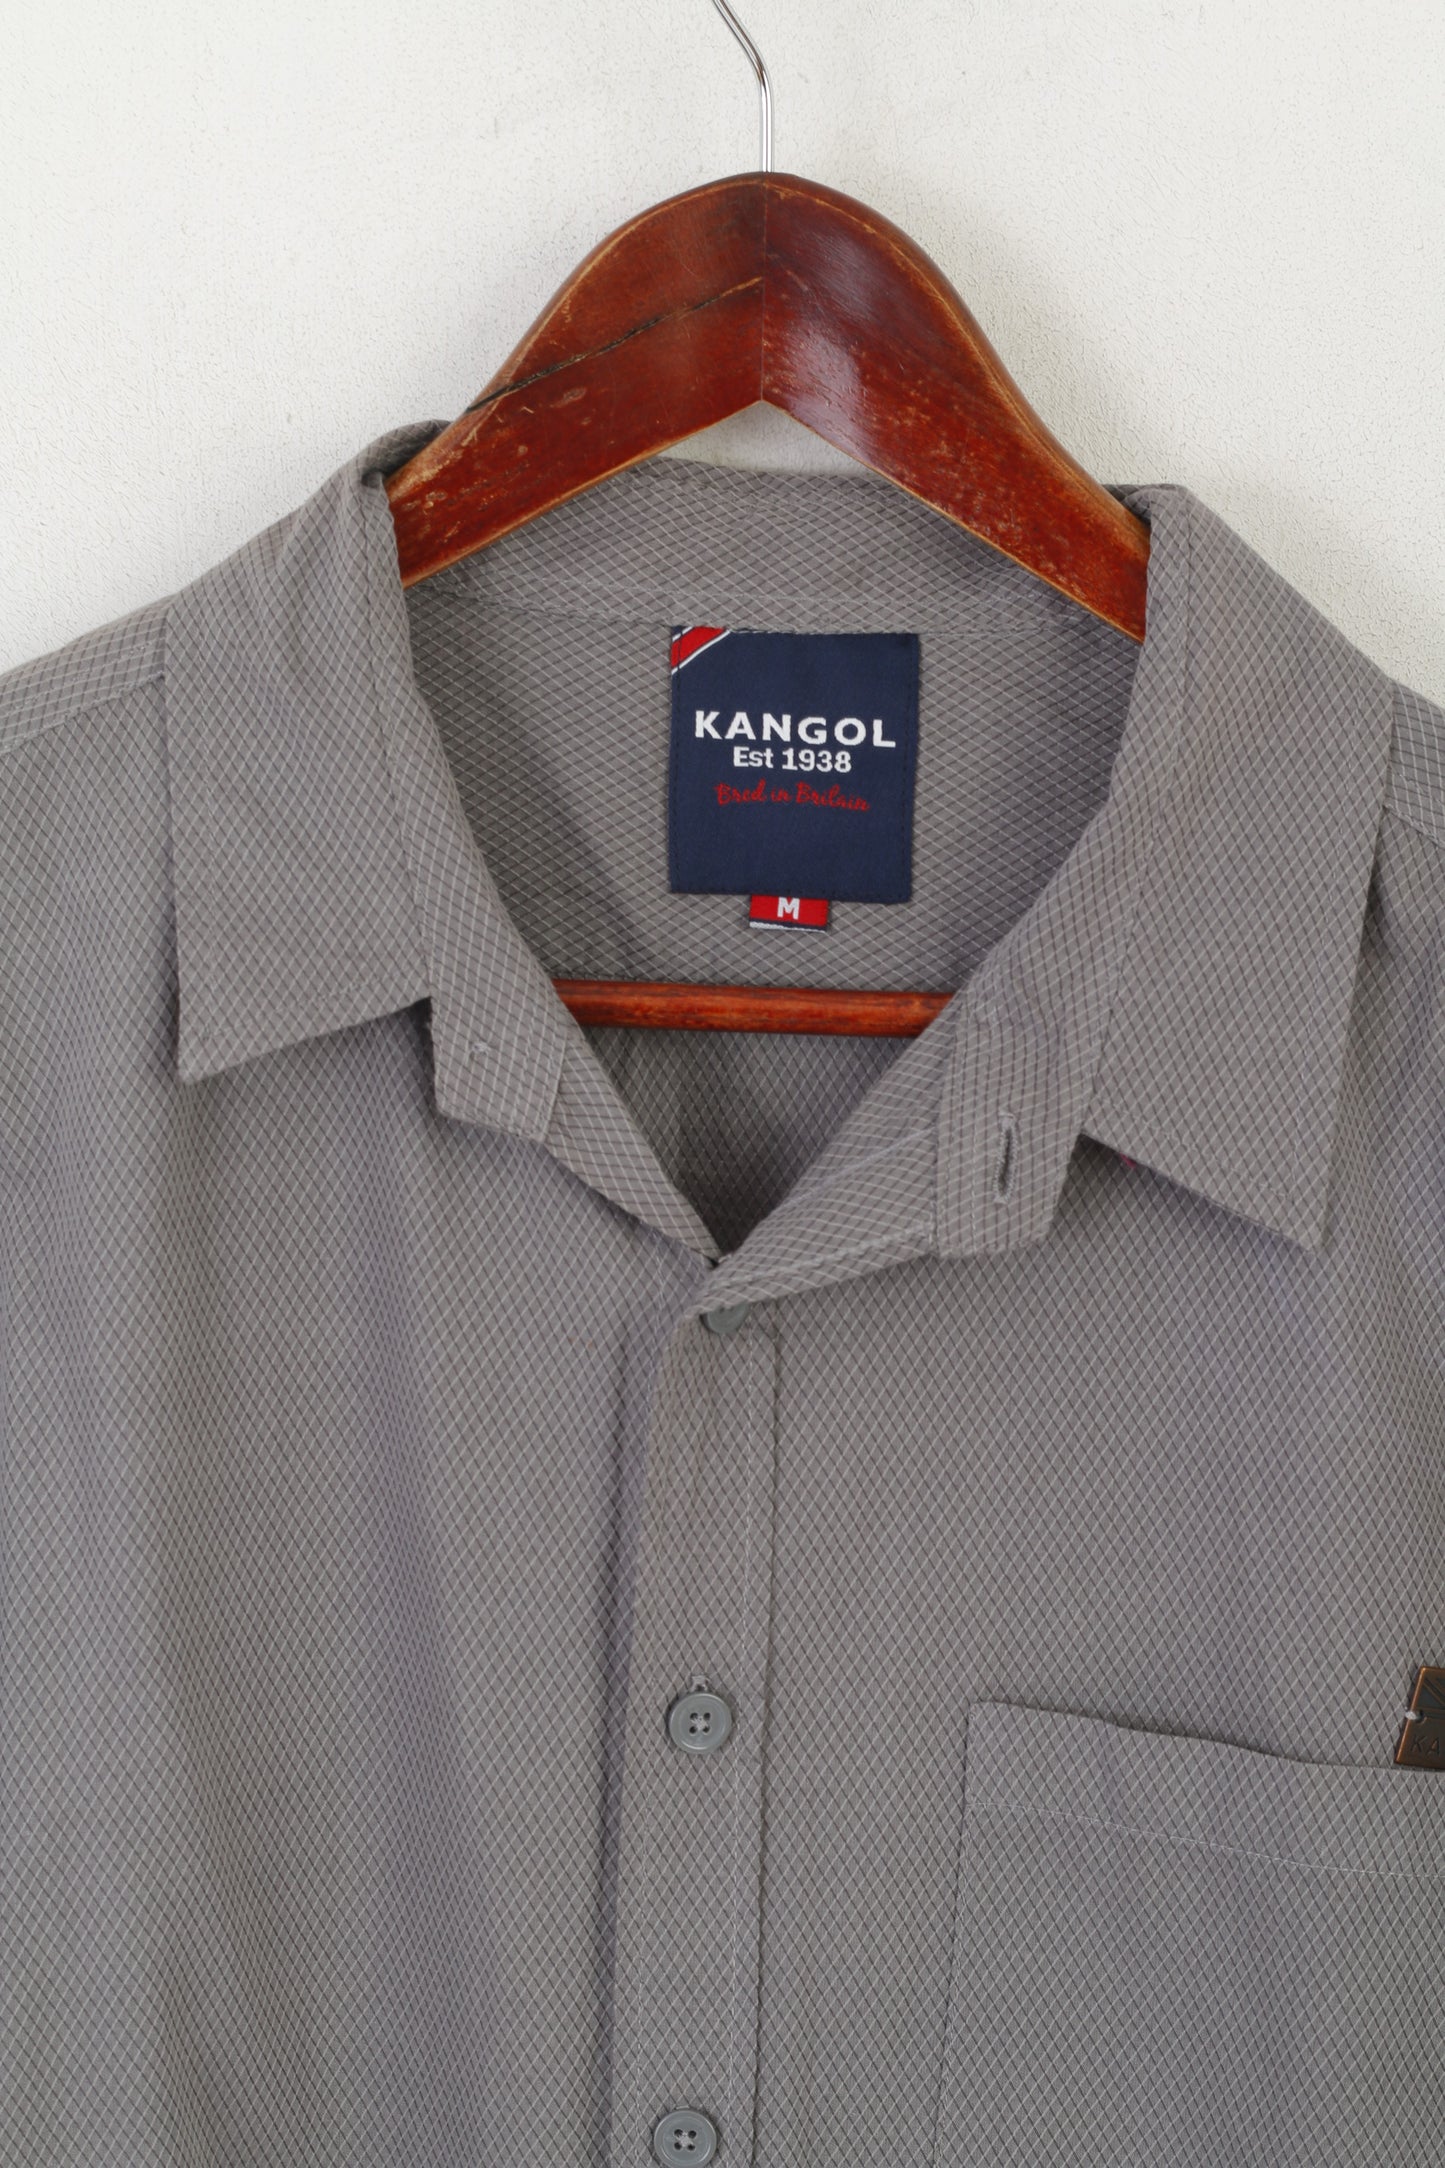 Kangol Men M Casual Shirt Gryy Cotton Thin Vintage Pocket Long Sleeve Top